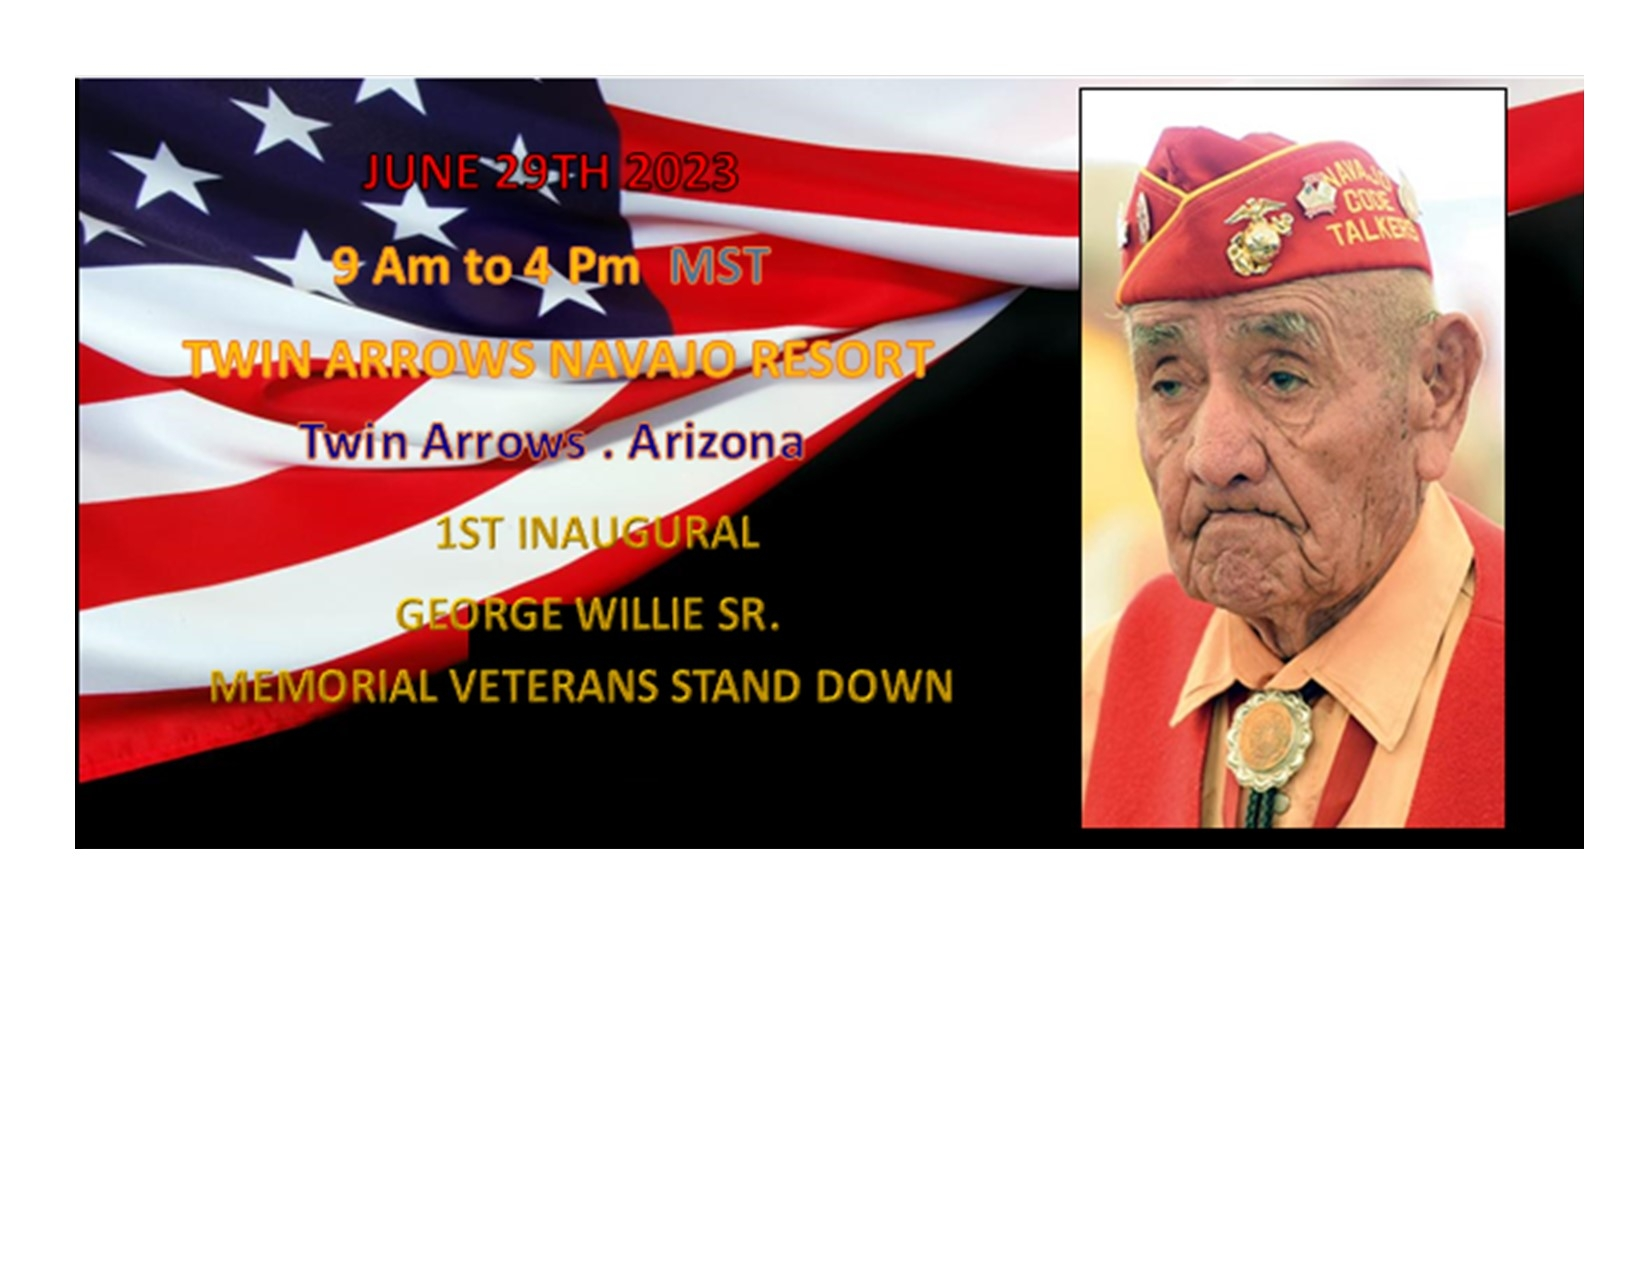 George Willie Sr. Memorial Veterans Stand Down